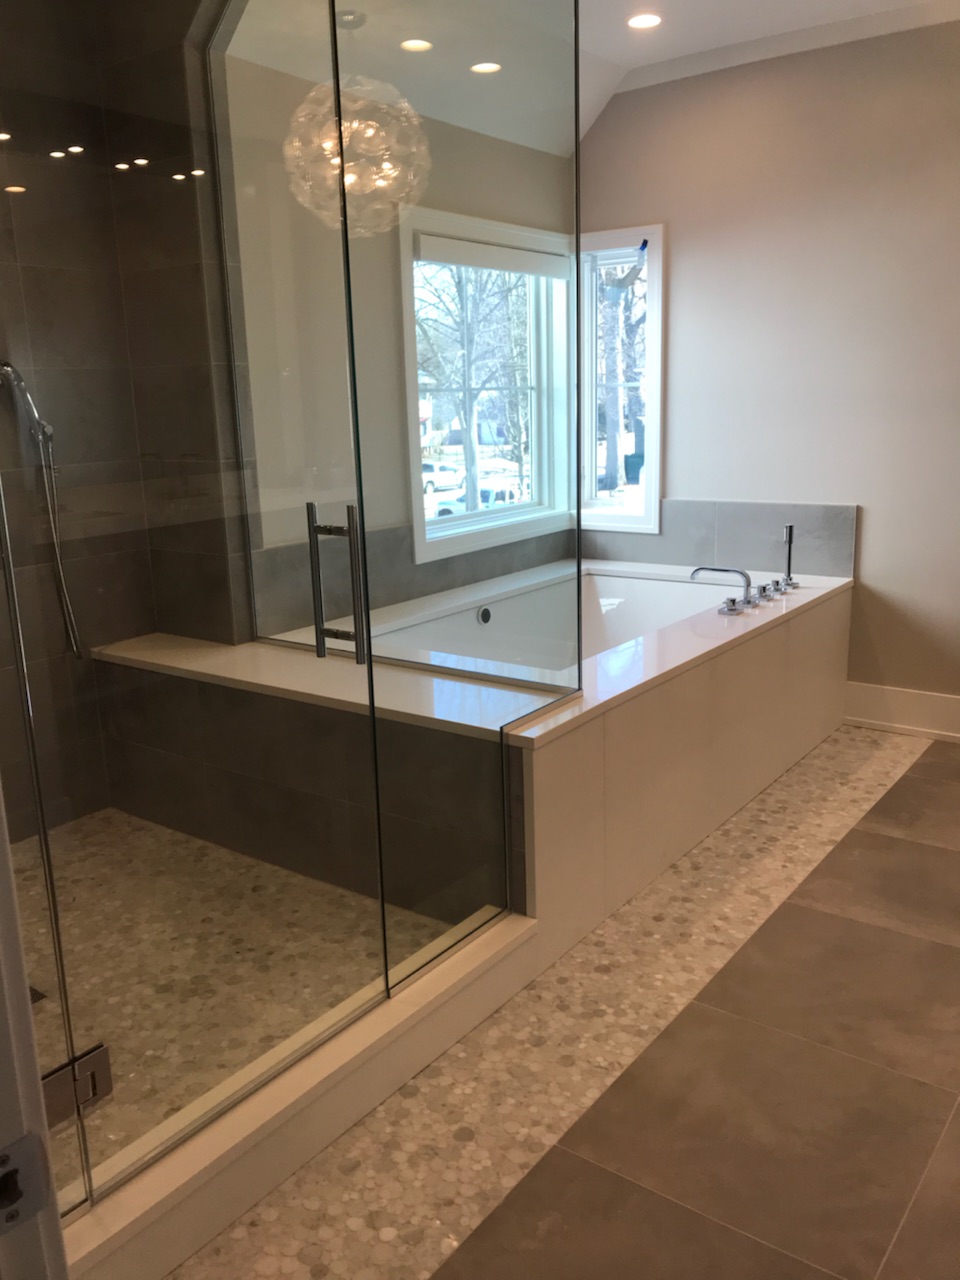 Custom made bathroom countertops to cover bath